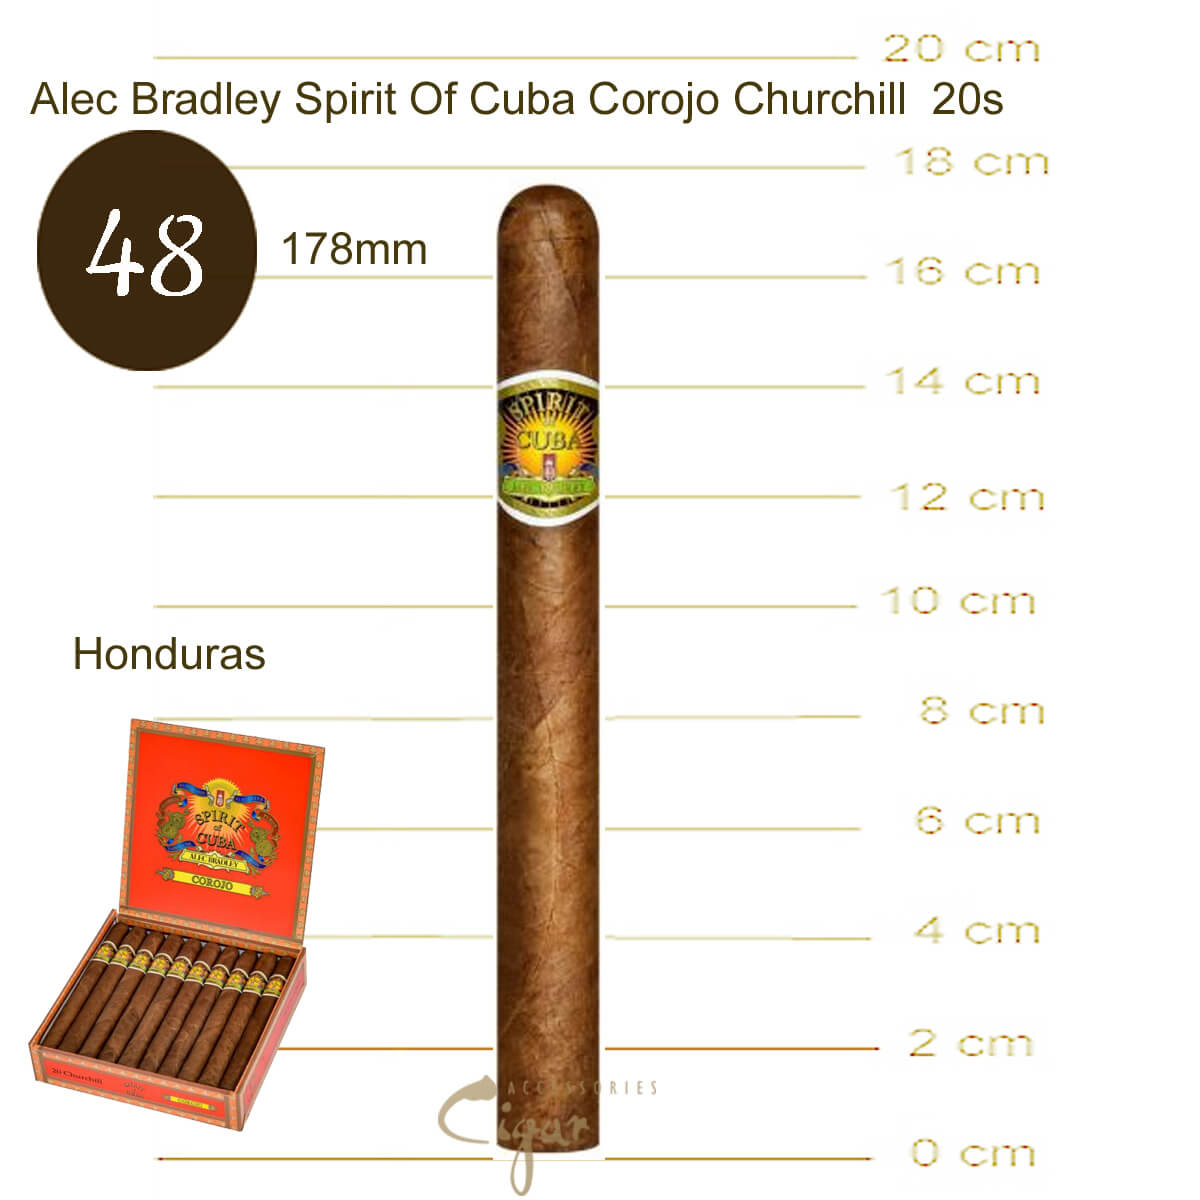 Alec-Bradley-Spirit-of-Cuba-Corojo-churchill-hcm